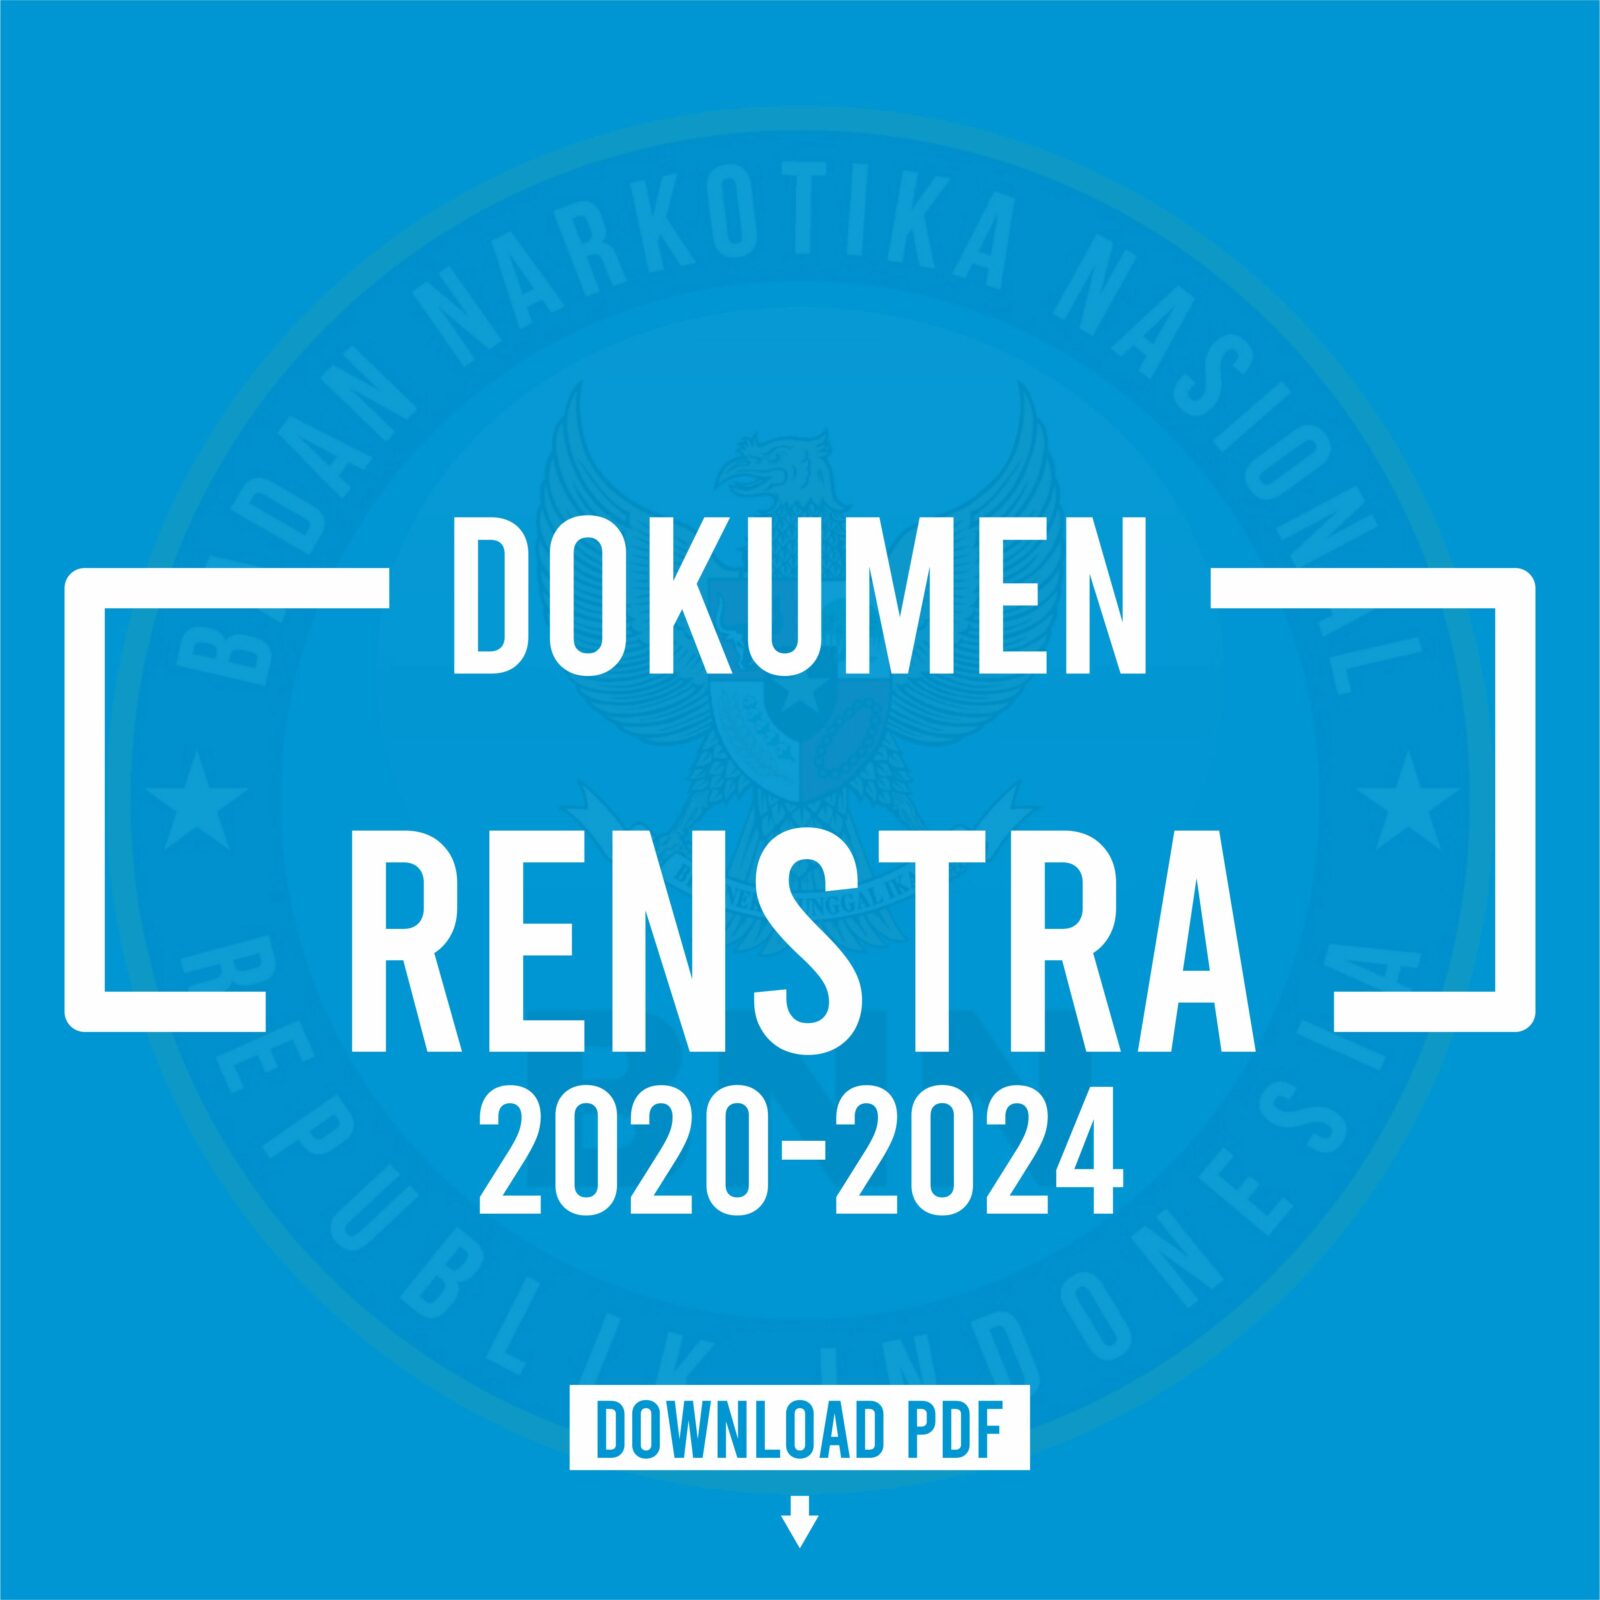 DOKUMEN RENSTRA 2020-2024